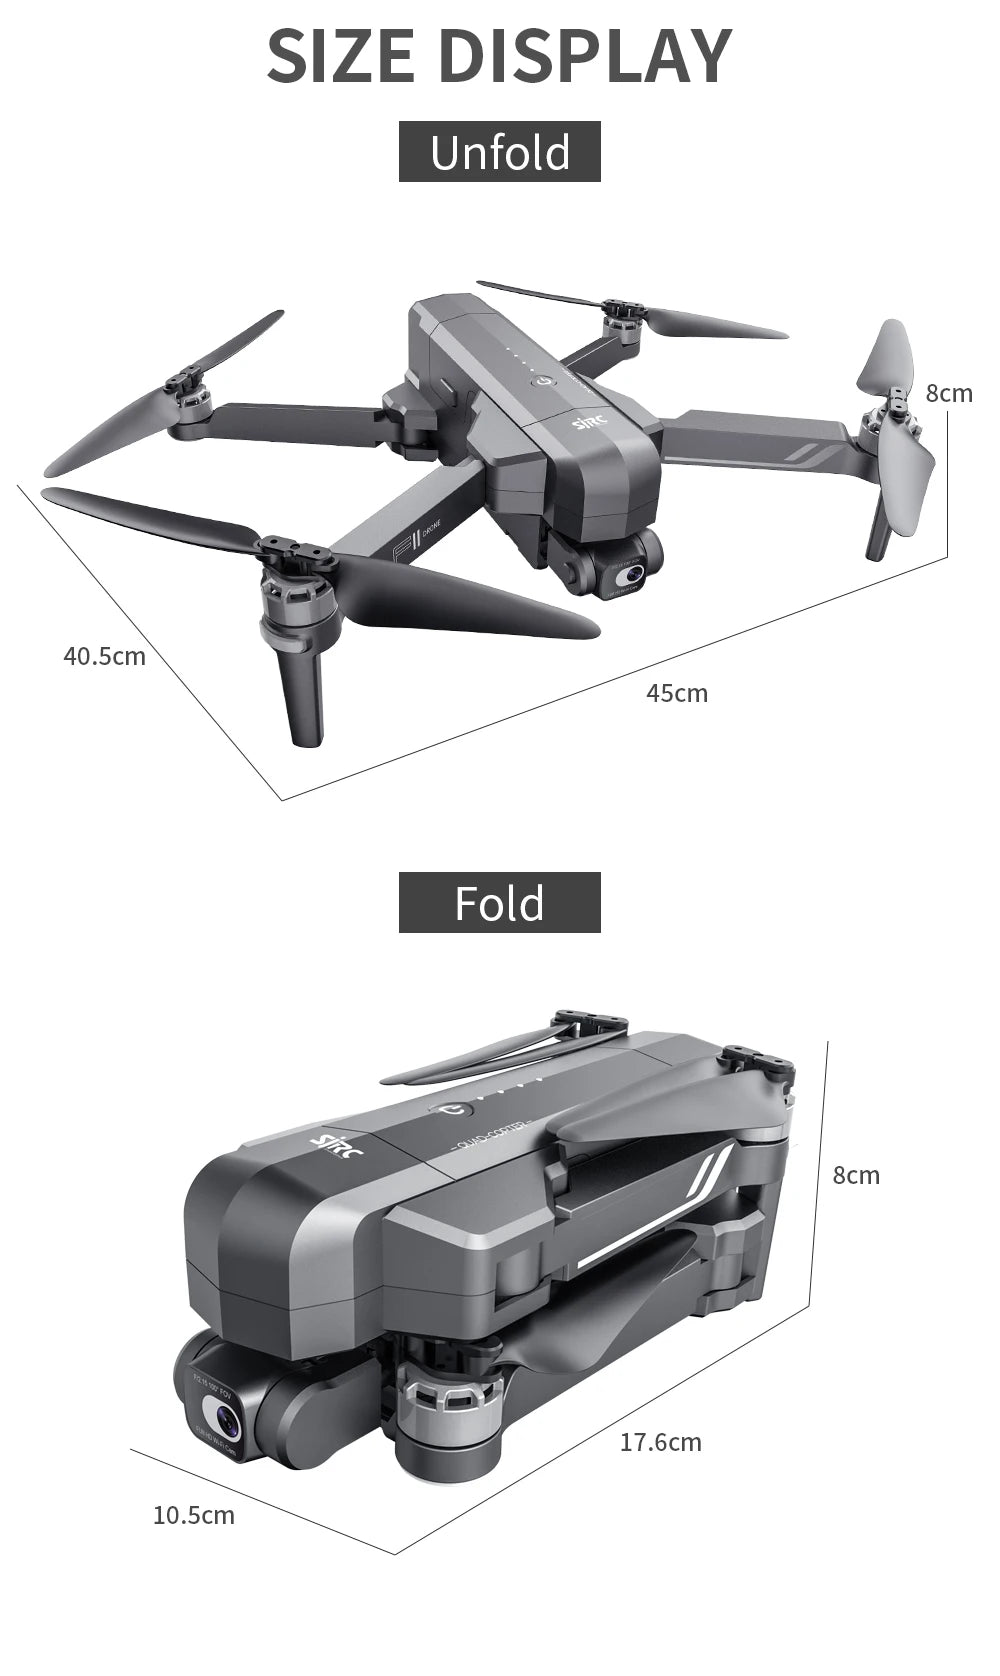 F11S PRO Drone, SIZE DISPLAY Unfold 8cm 40.Scm 45cm